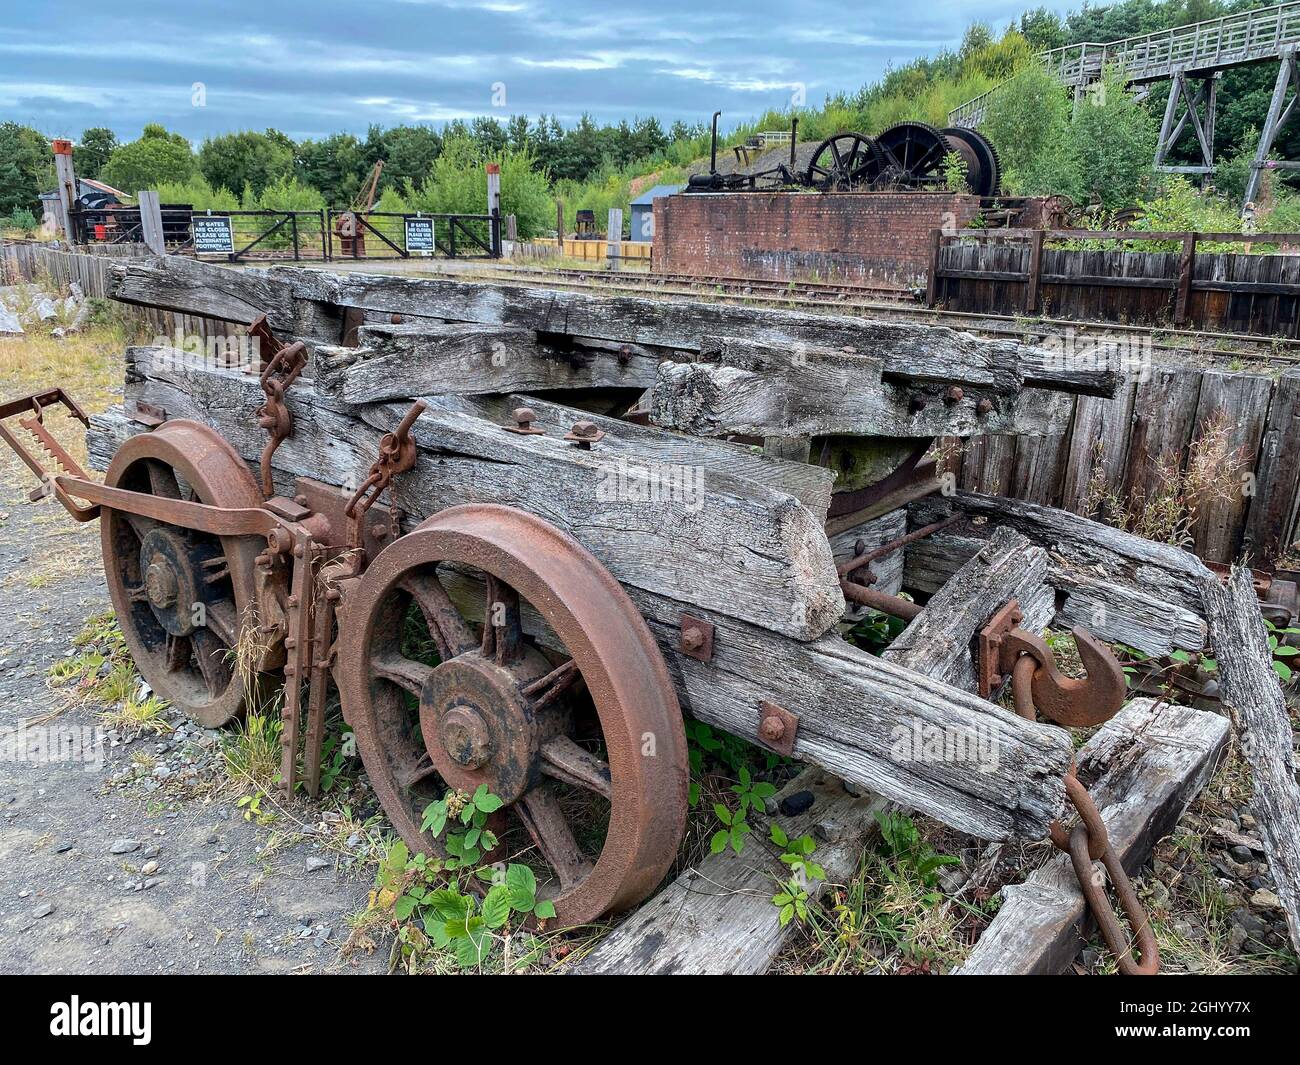 Industrieller Zerfall - alte verlassene Eisenbahnanlagen rosten langsam weg. Stockfoto